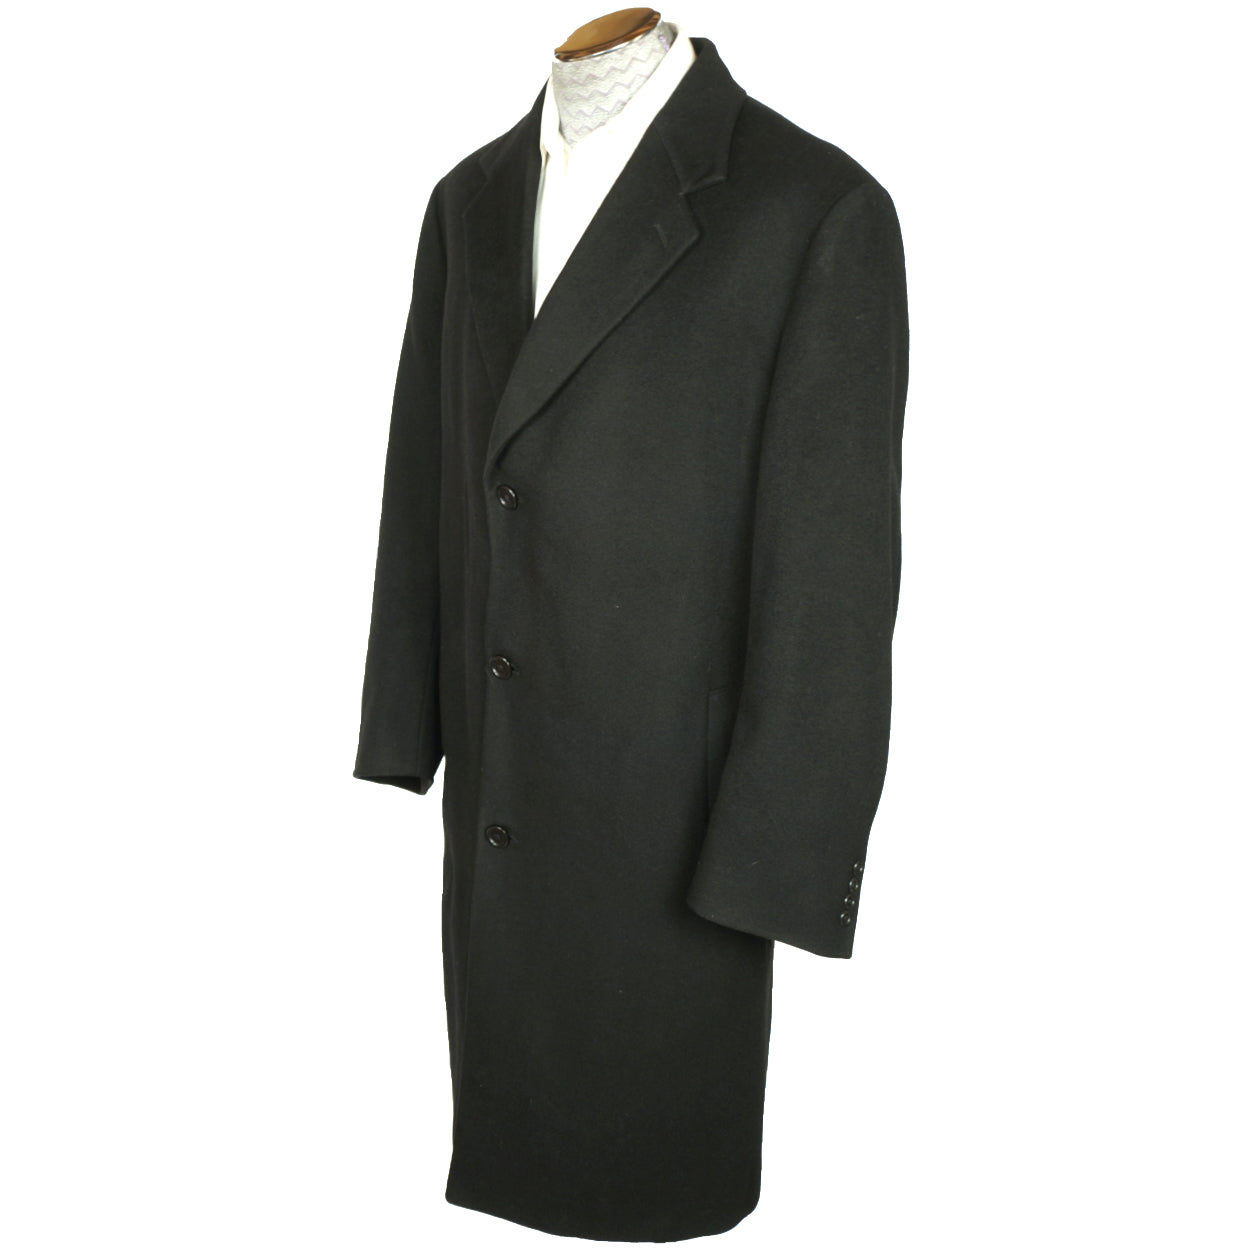 Vintage Mens Topcoat Overcoat 100% Pure Italian Cashmere Black Coat ...